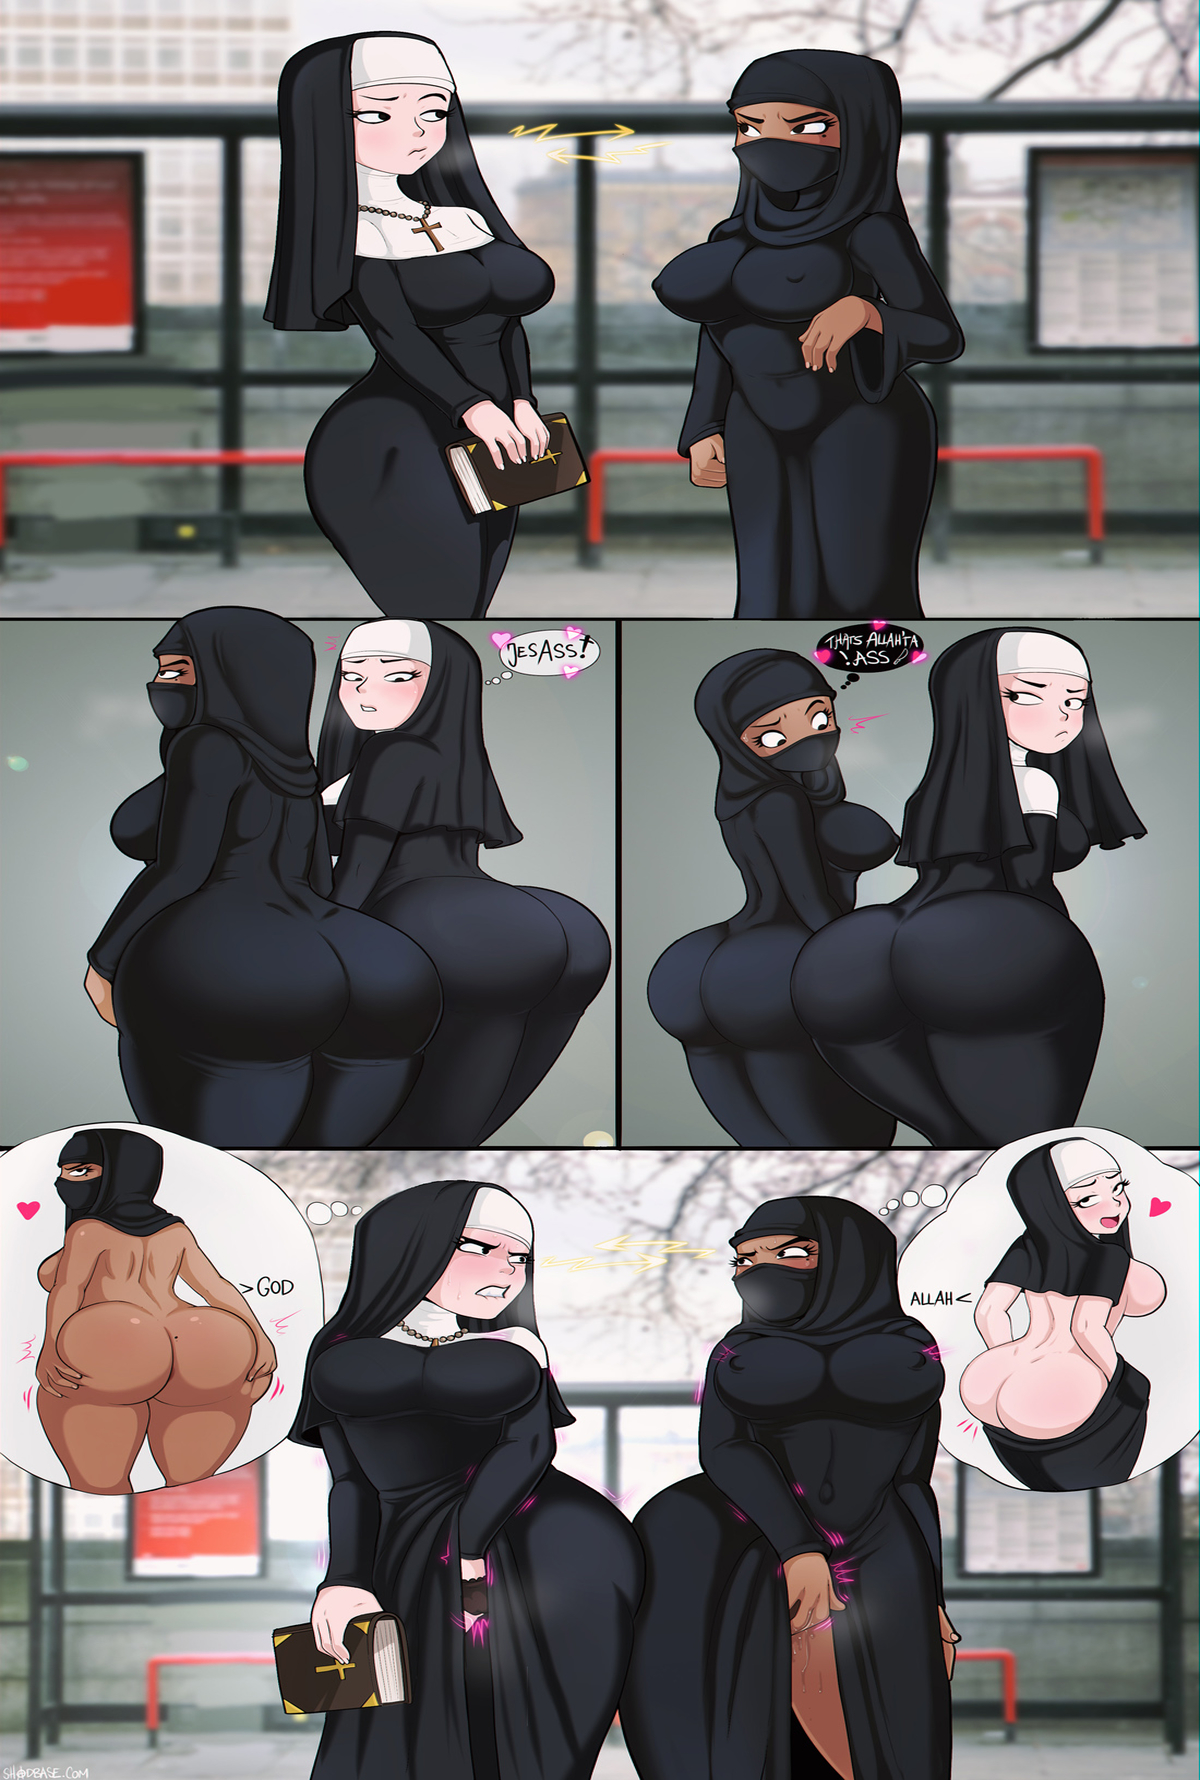 aka: Tsundre Religion, Tsundre, Tsundere, Religion, Nun, Hijab, Niqab, Chri...